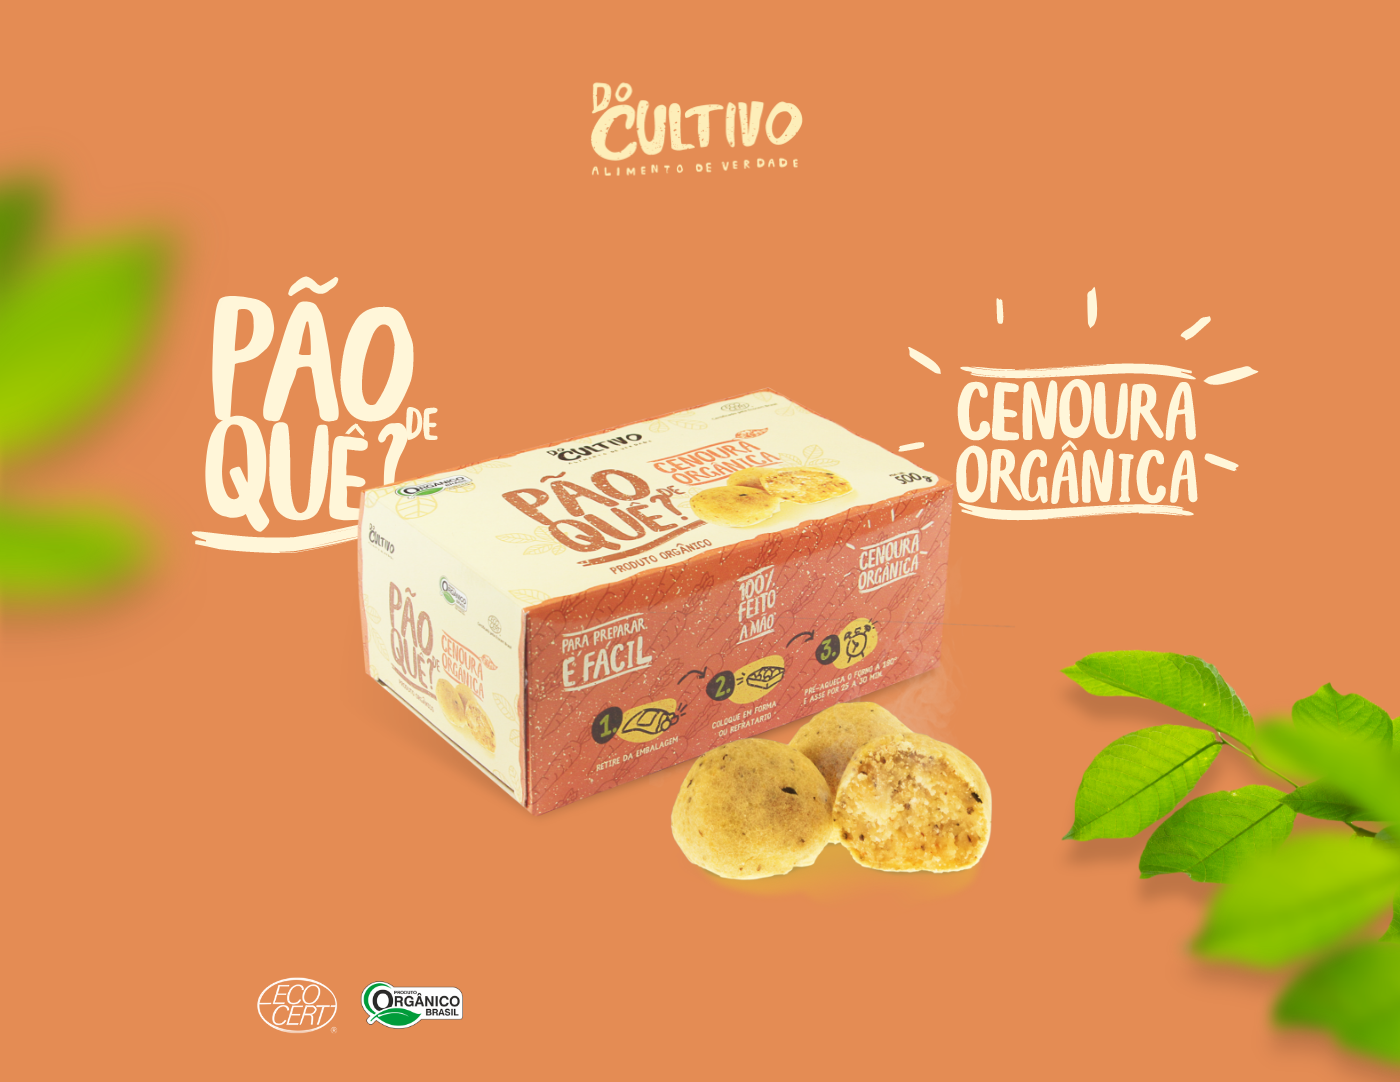 artesanal vegan Sustainability sustentabilidade organic organico Food  brand Rustico packing